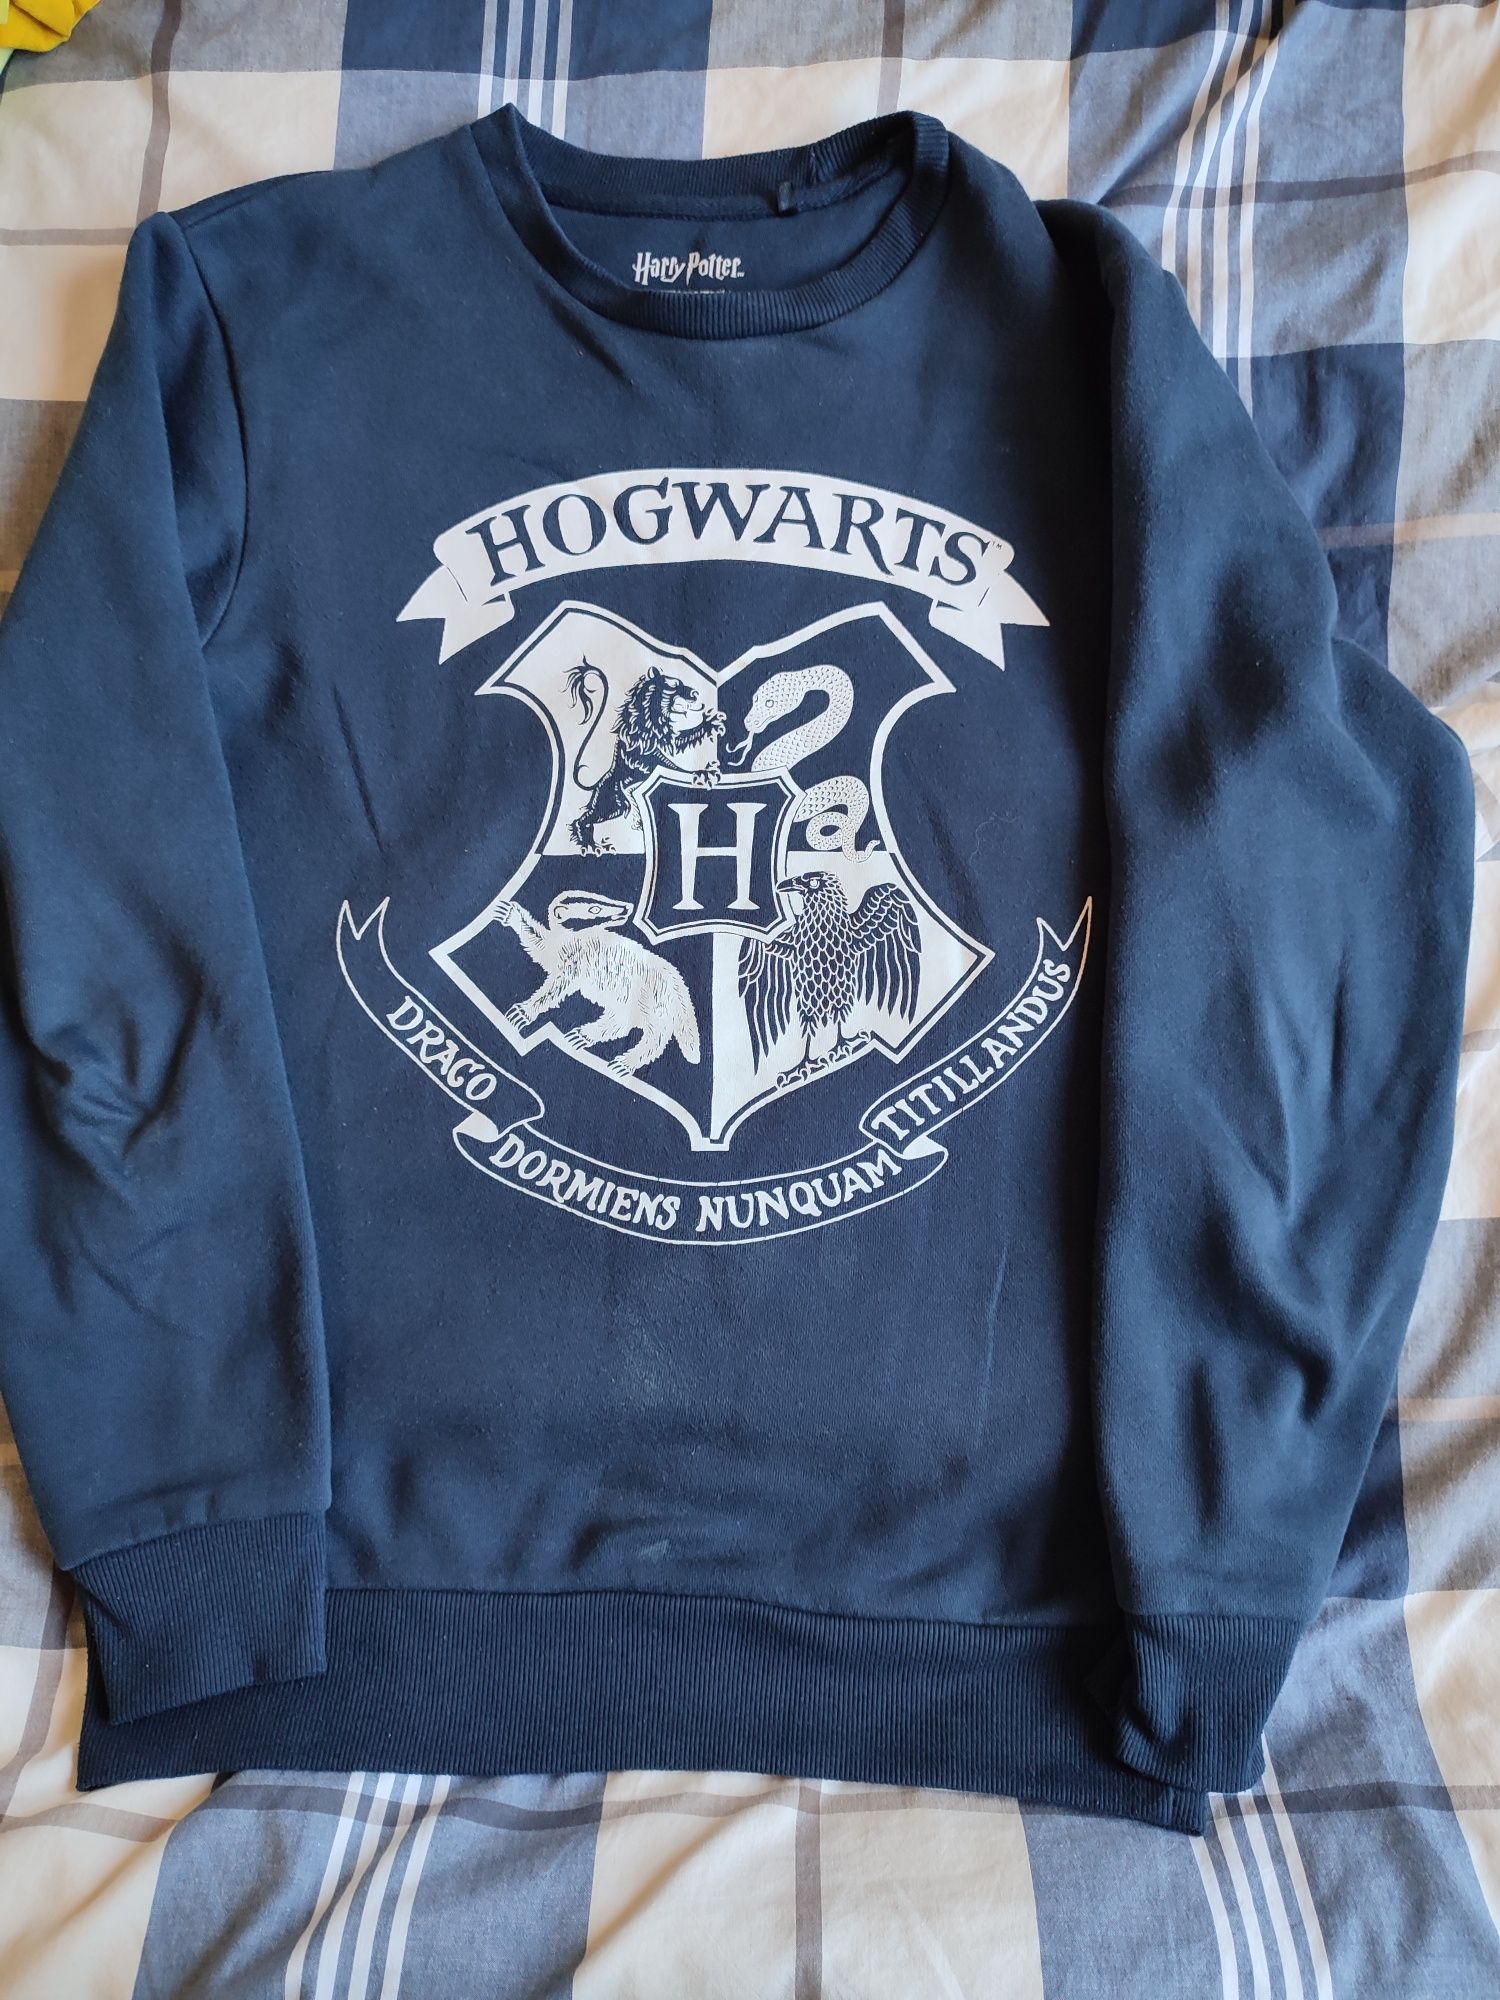 Bluza męska Harry Potter, house, rozm. S